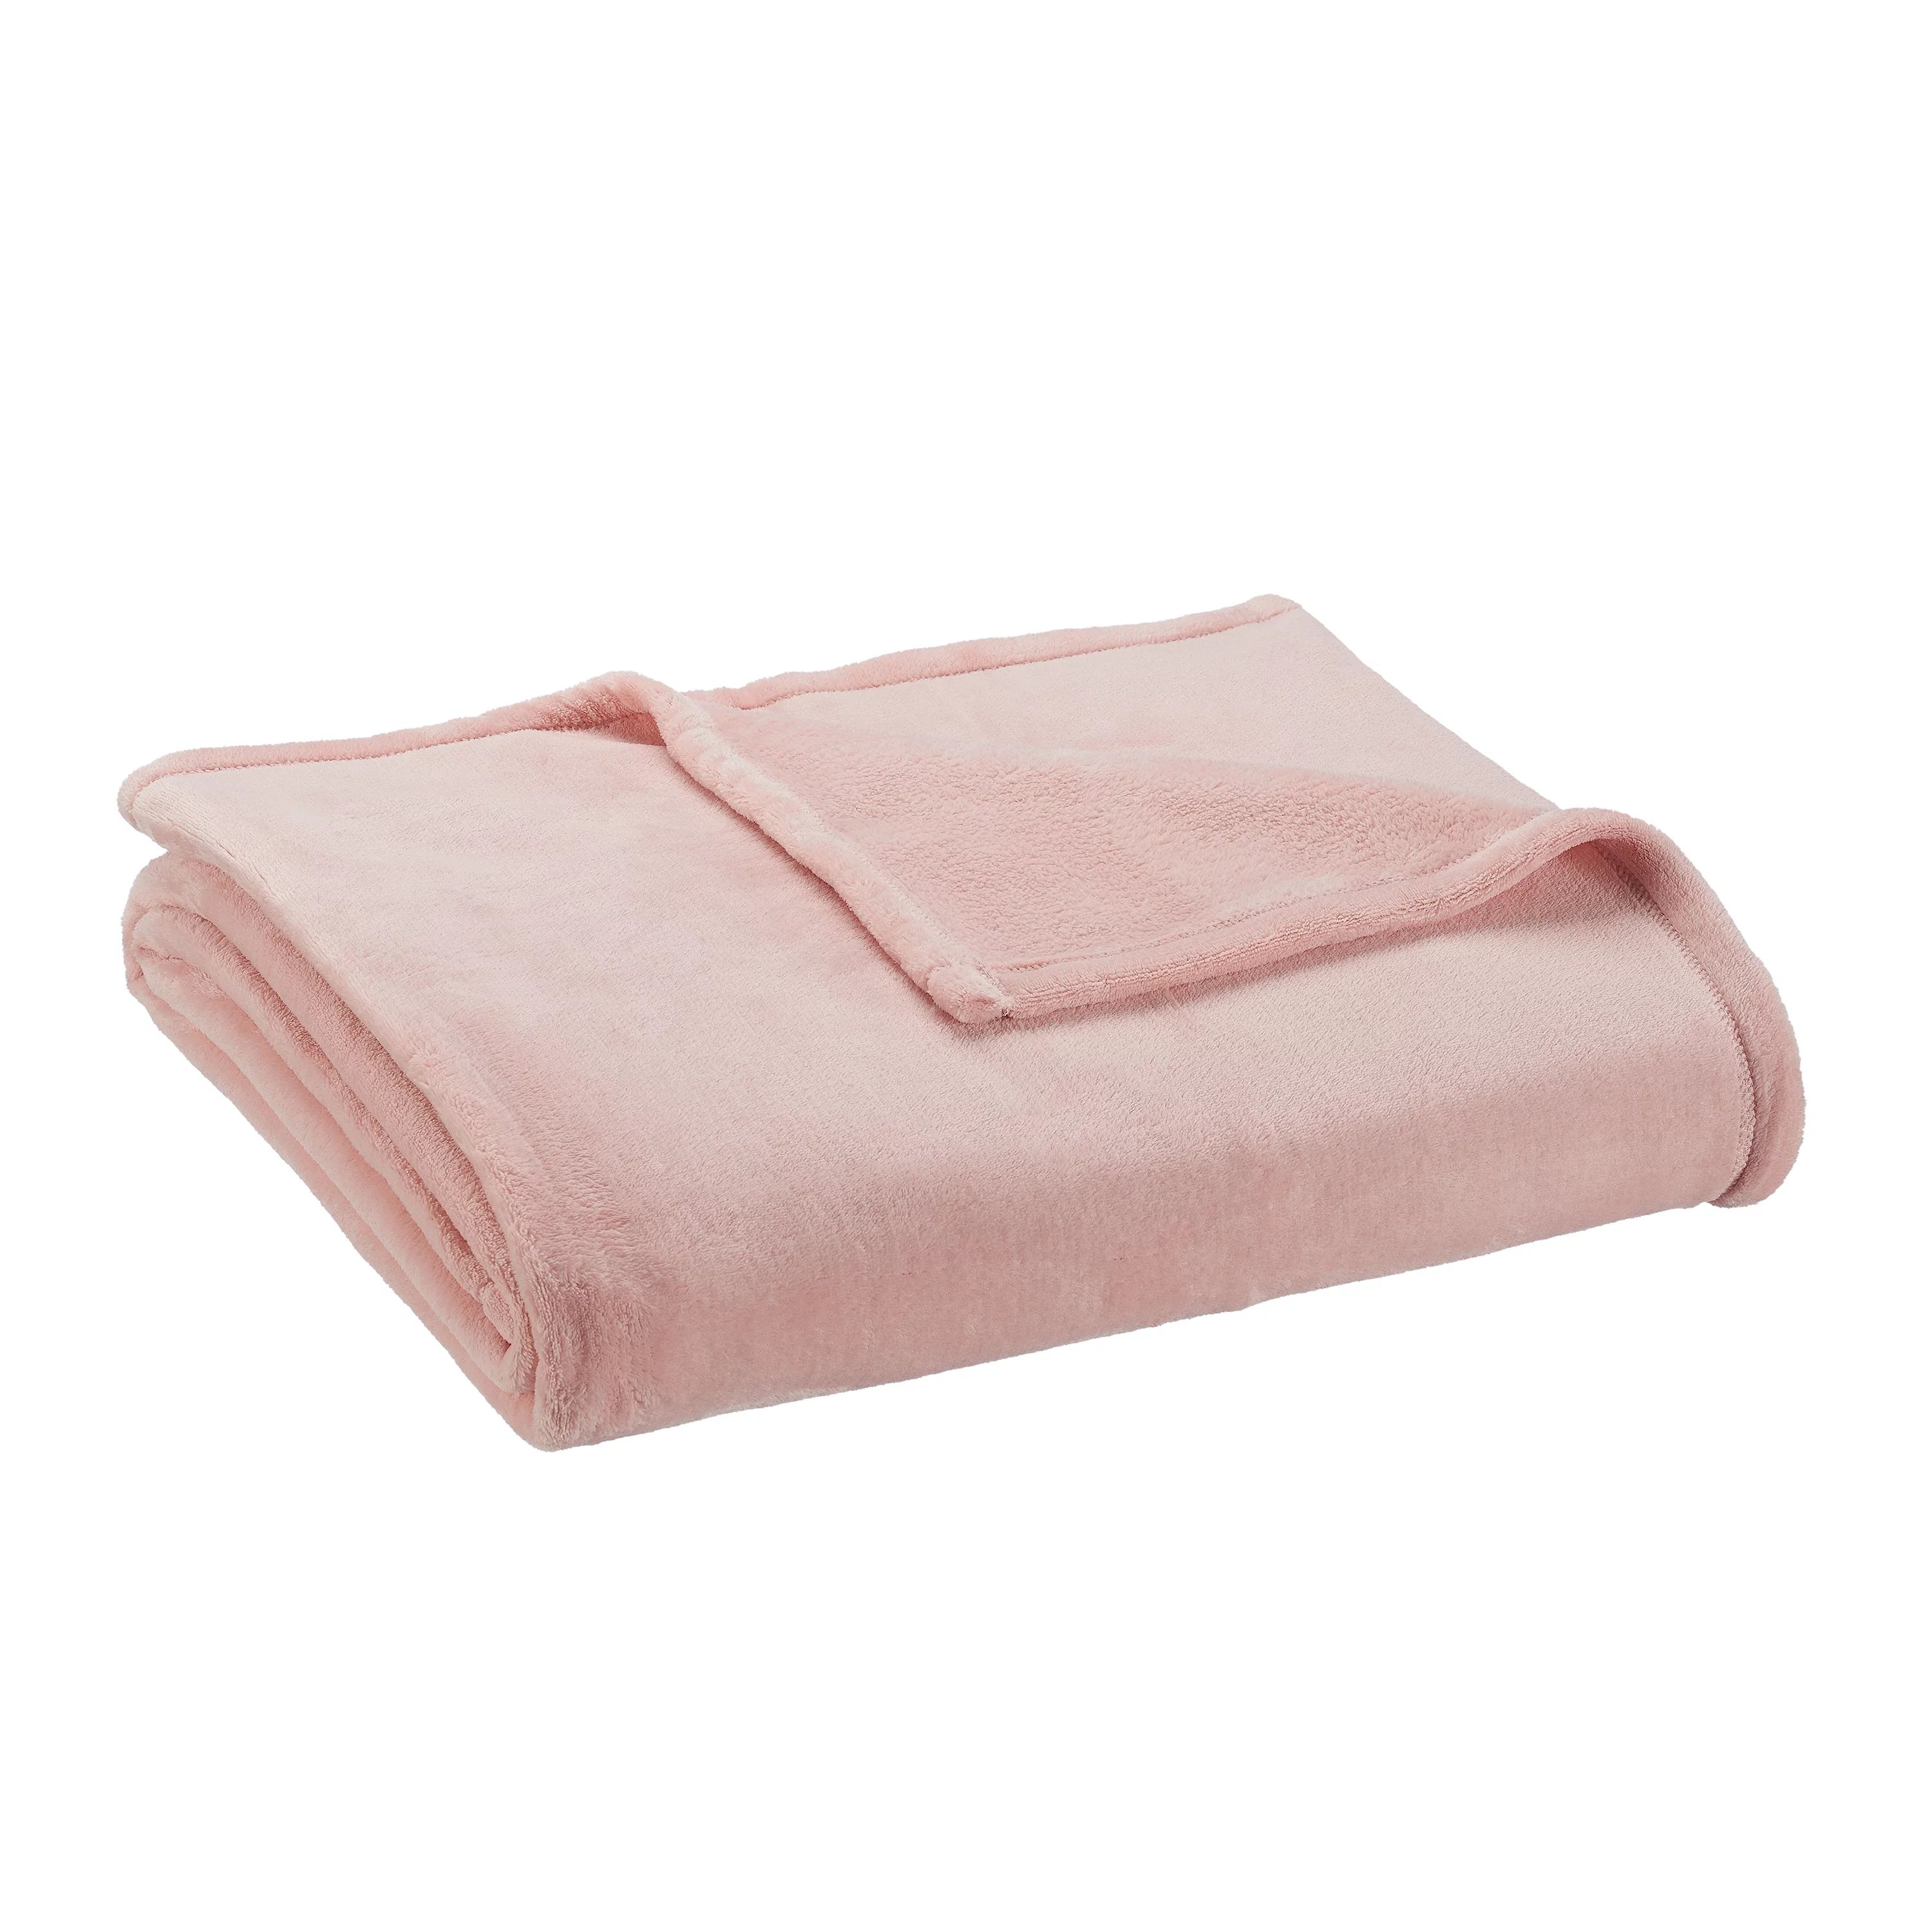 Mainstays Super Soft Plush Blanket, Full/Queen, Blush Pink | Walmart (US)